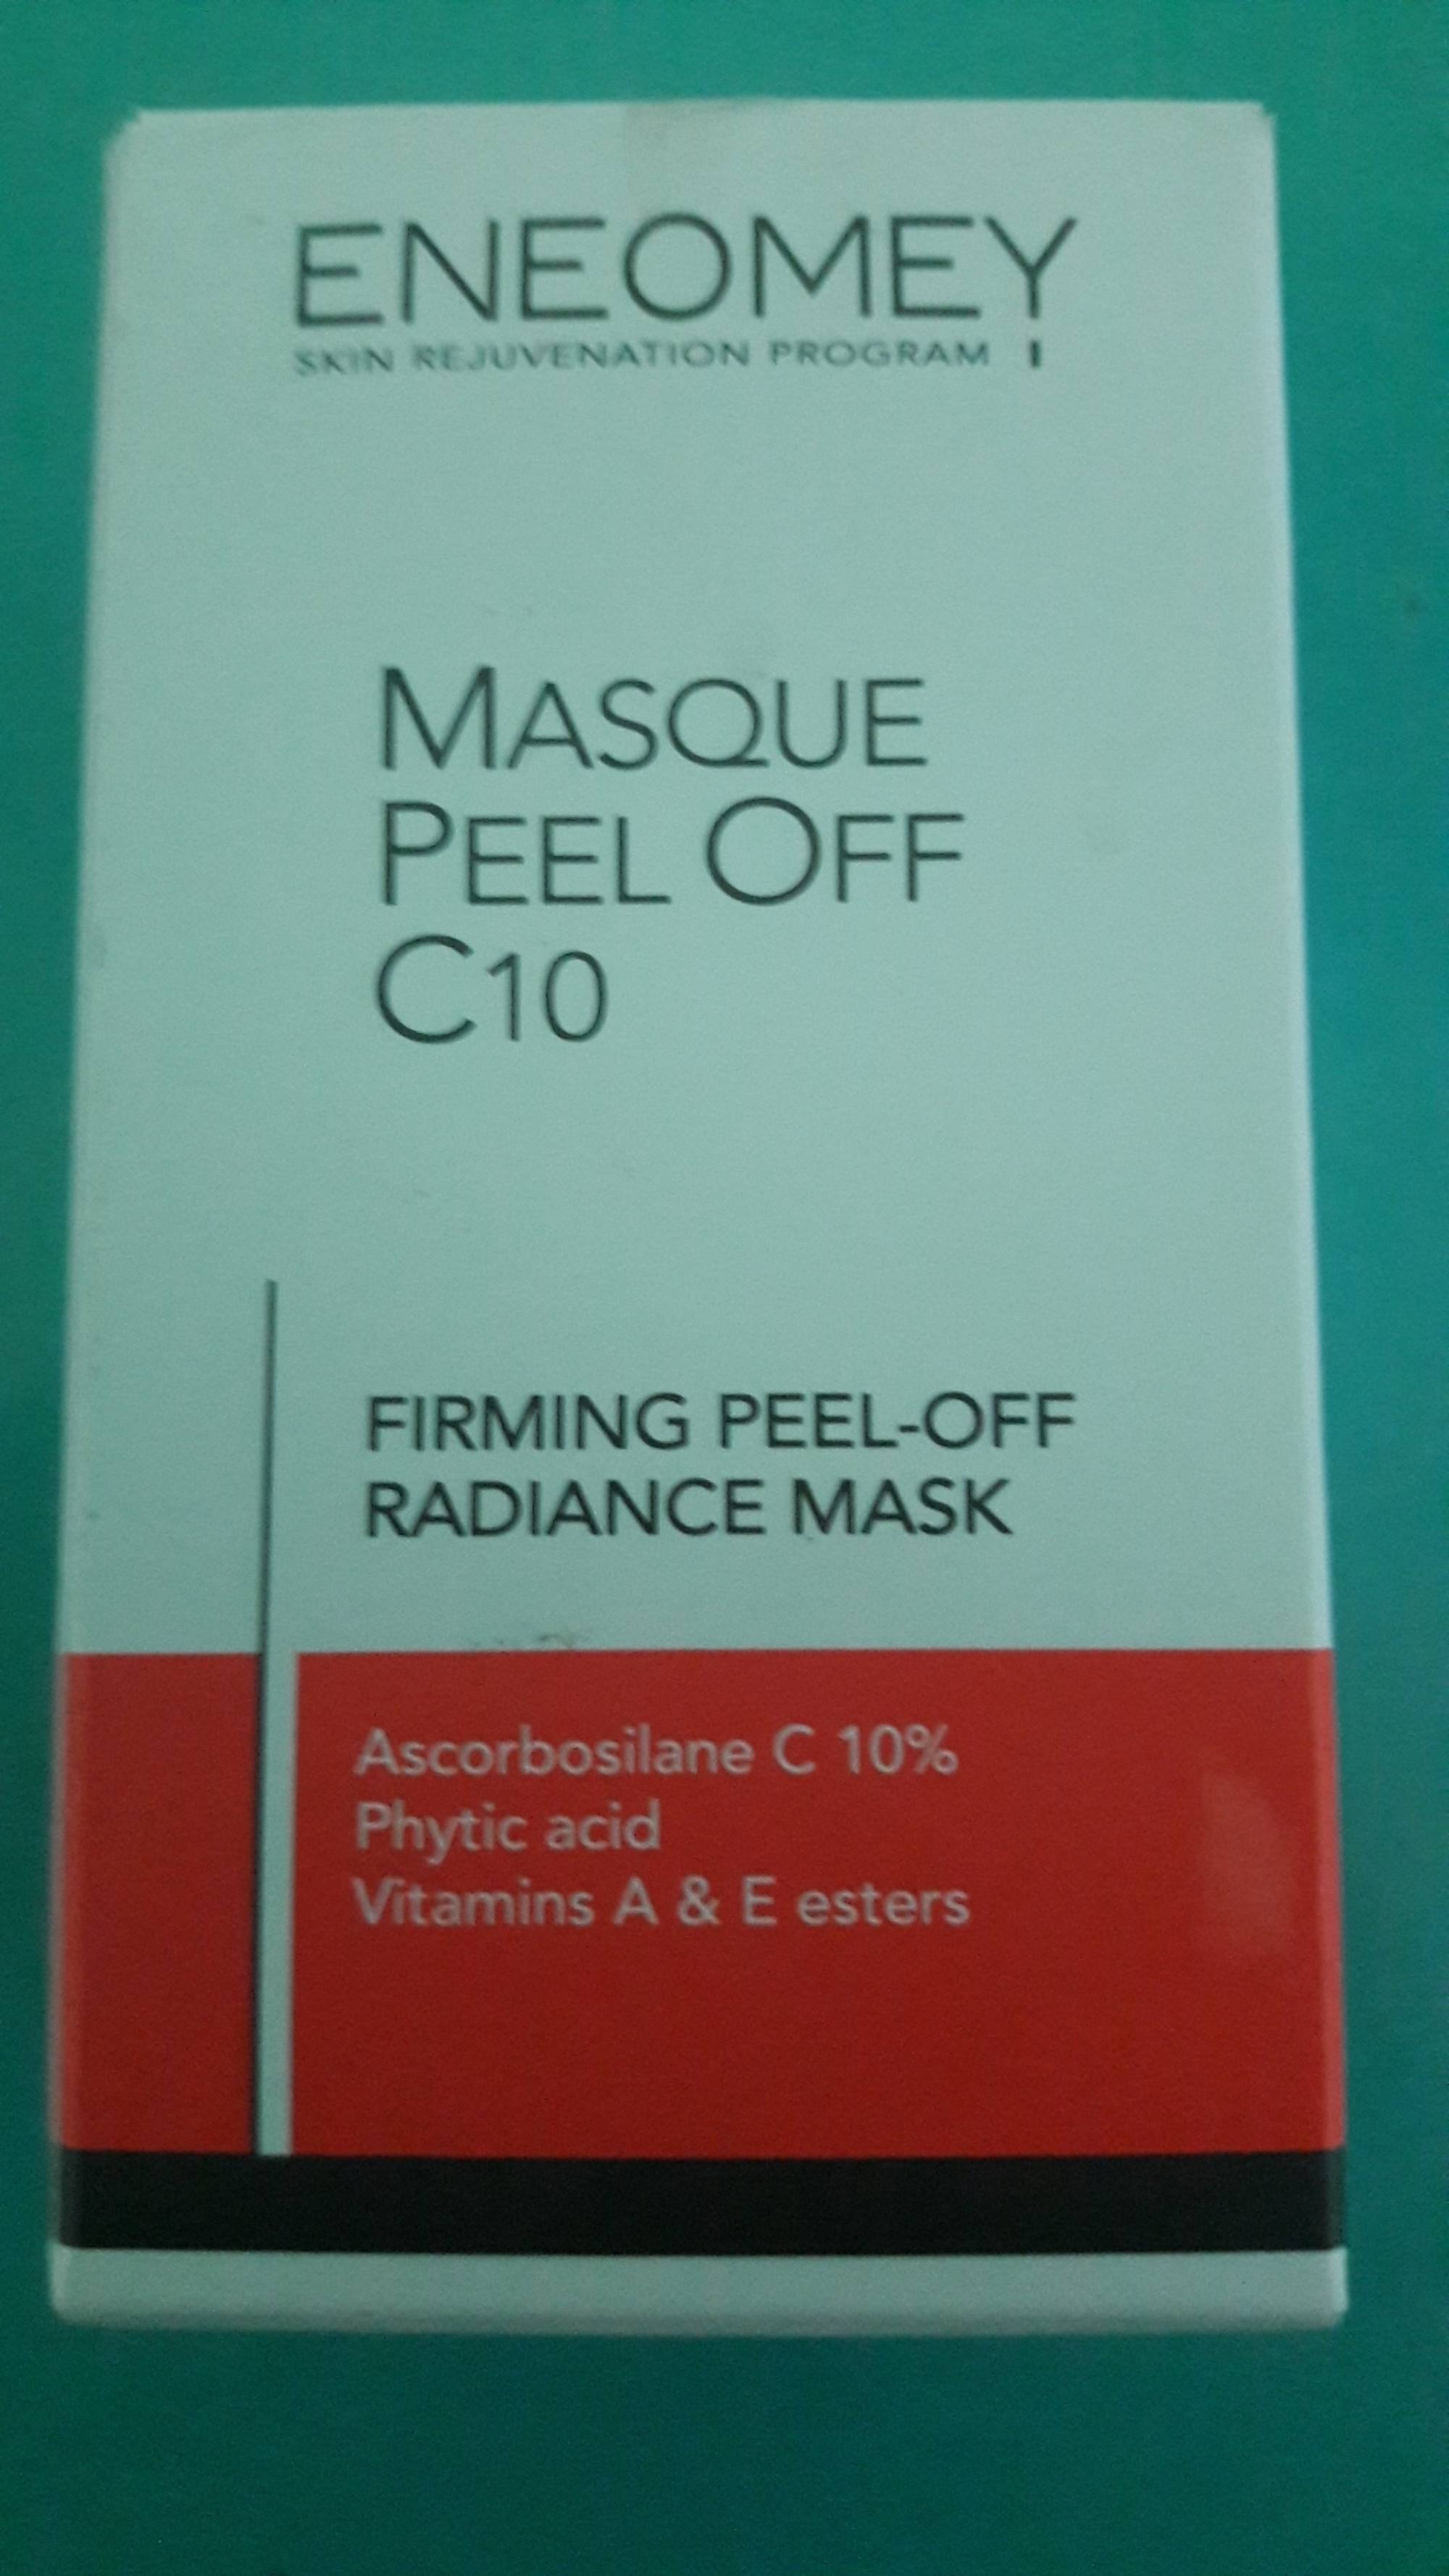 ENEOMEY - Masque Peel off C10